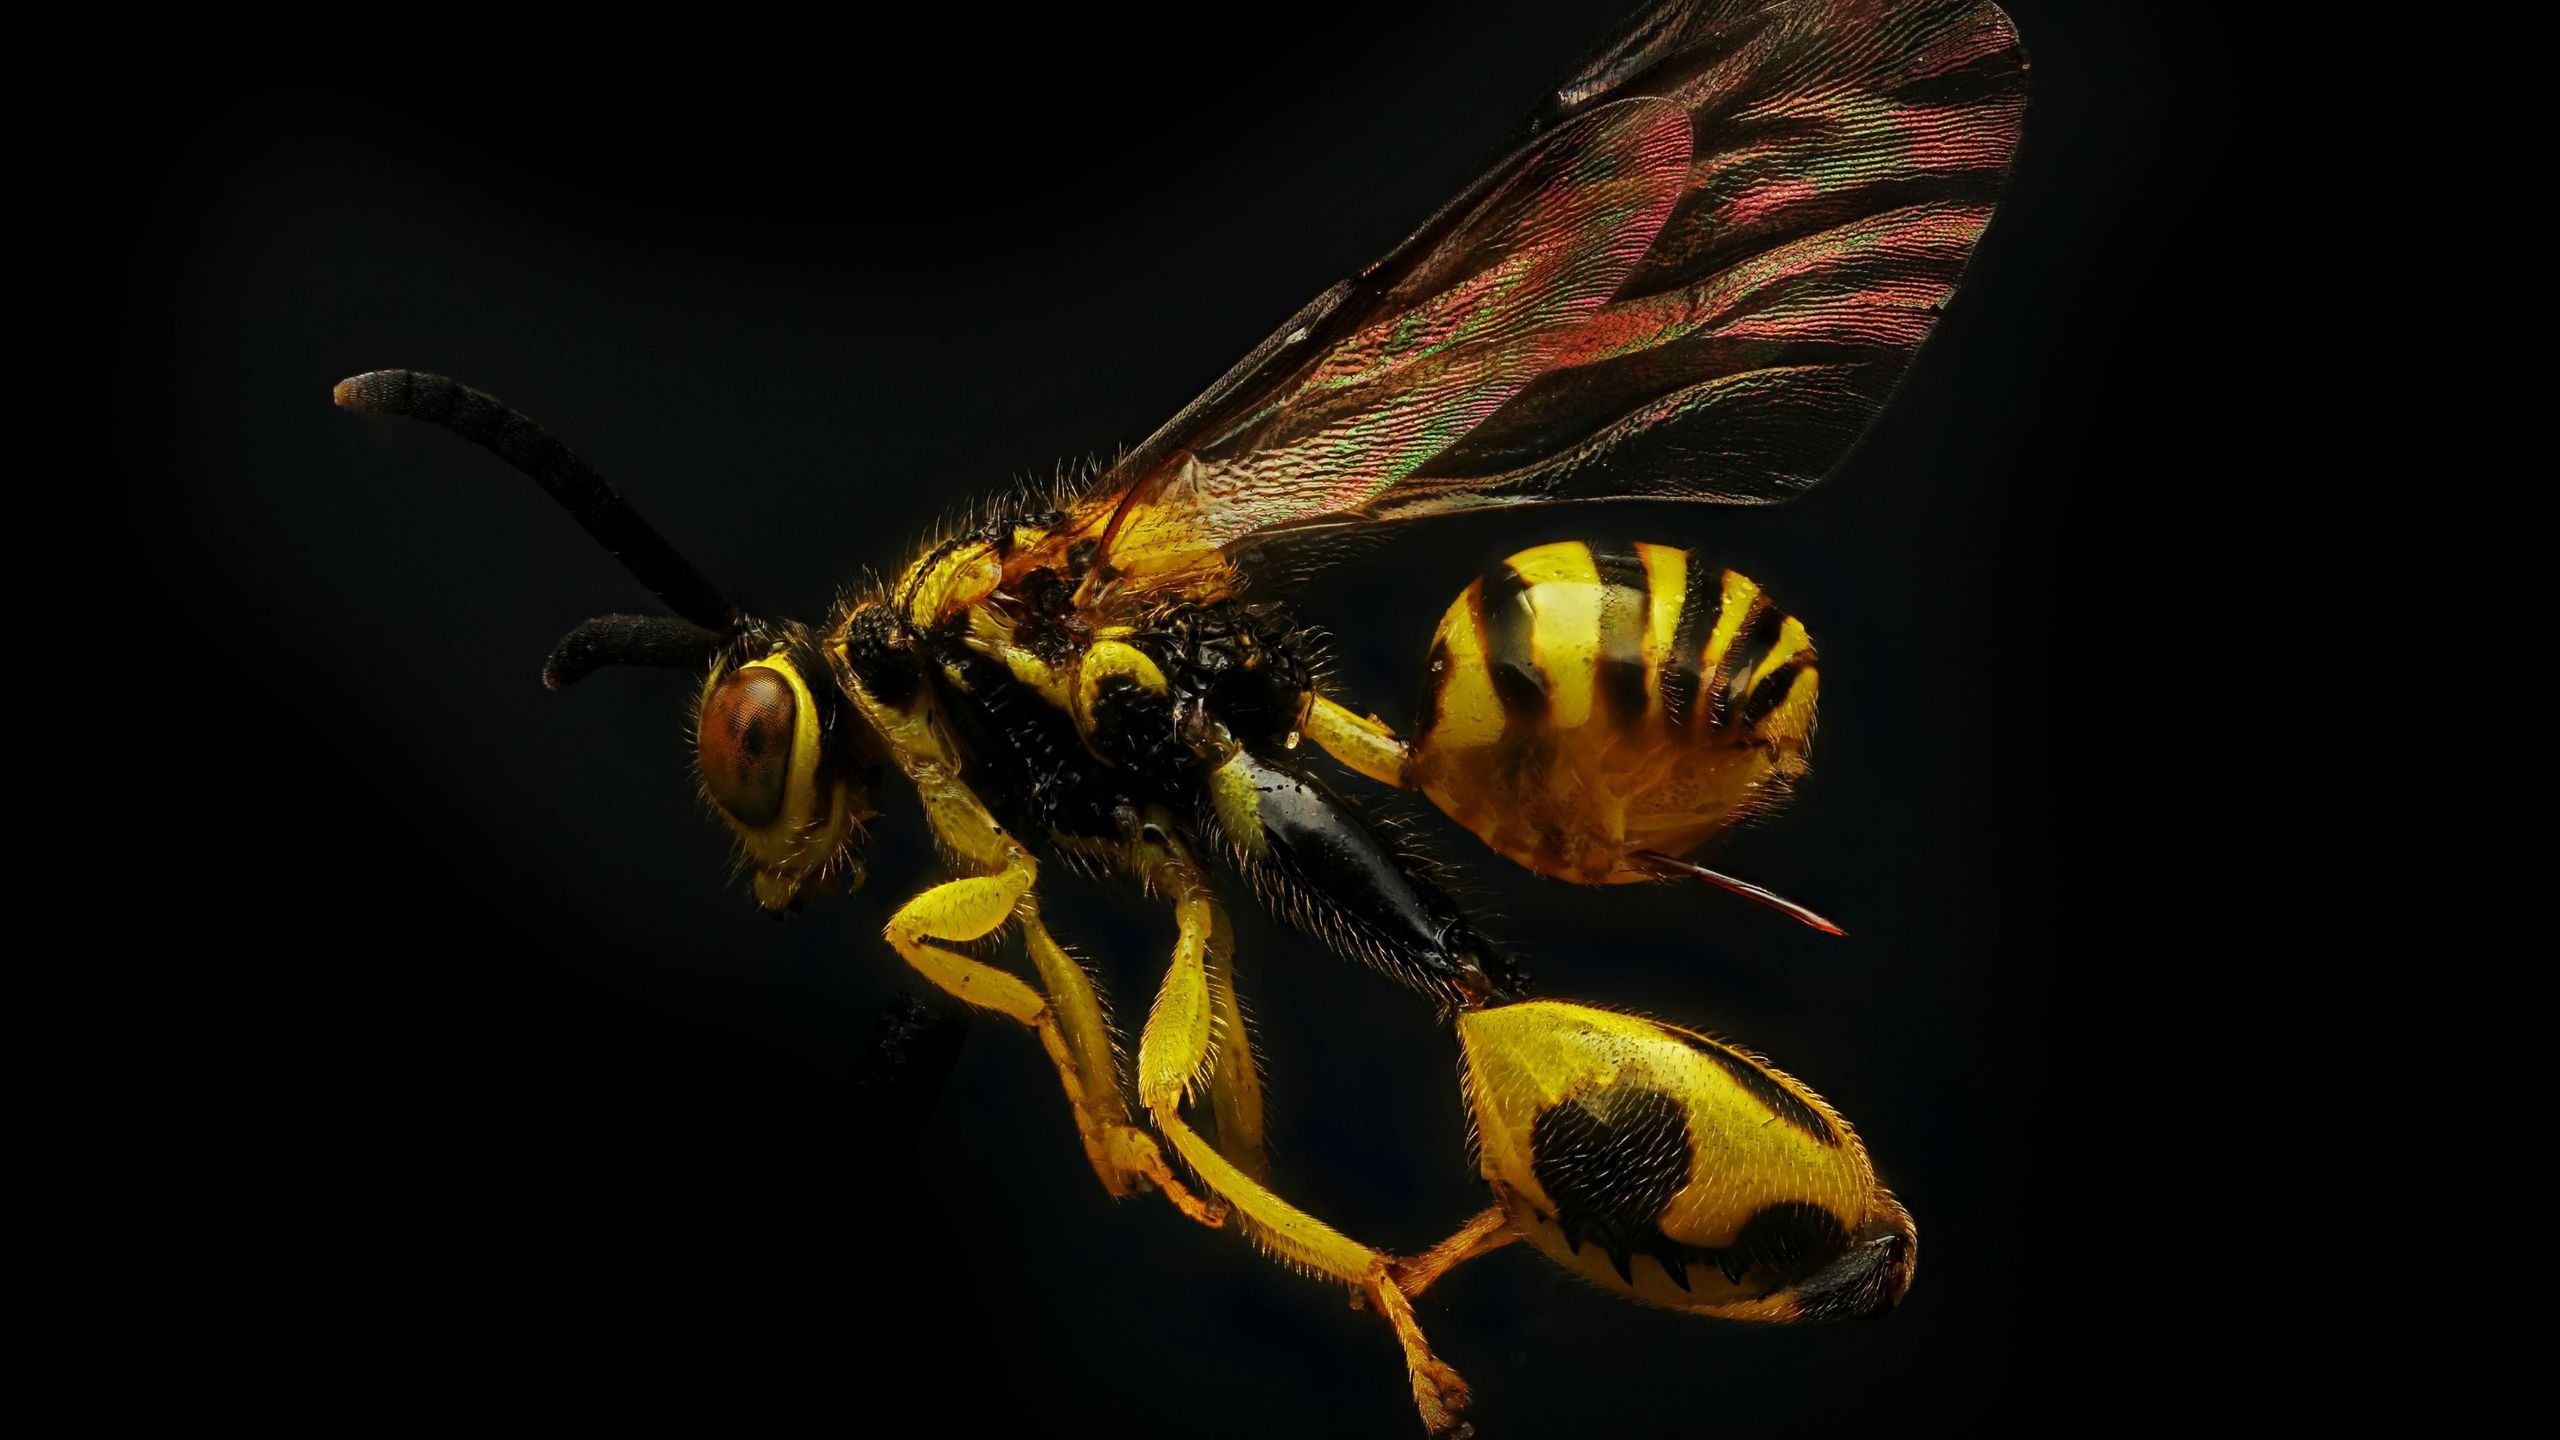 Wasp Wallpaper. Avenger the Wasp Desktop Wallpaper, Wasp Wallpaper and Wasp Lisbeth Salander Wallpaper